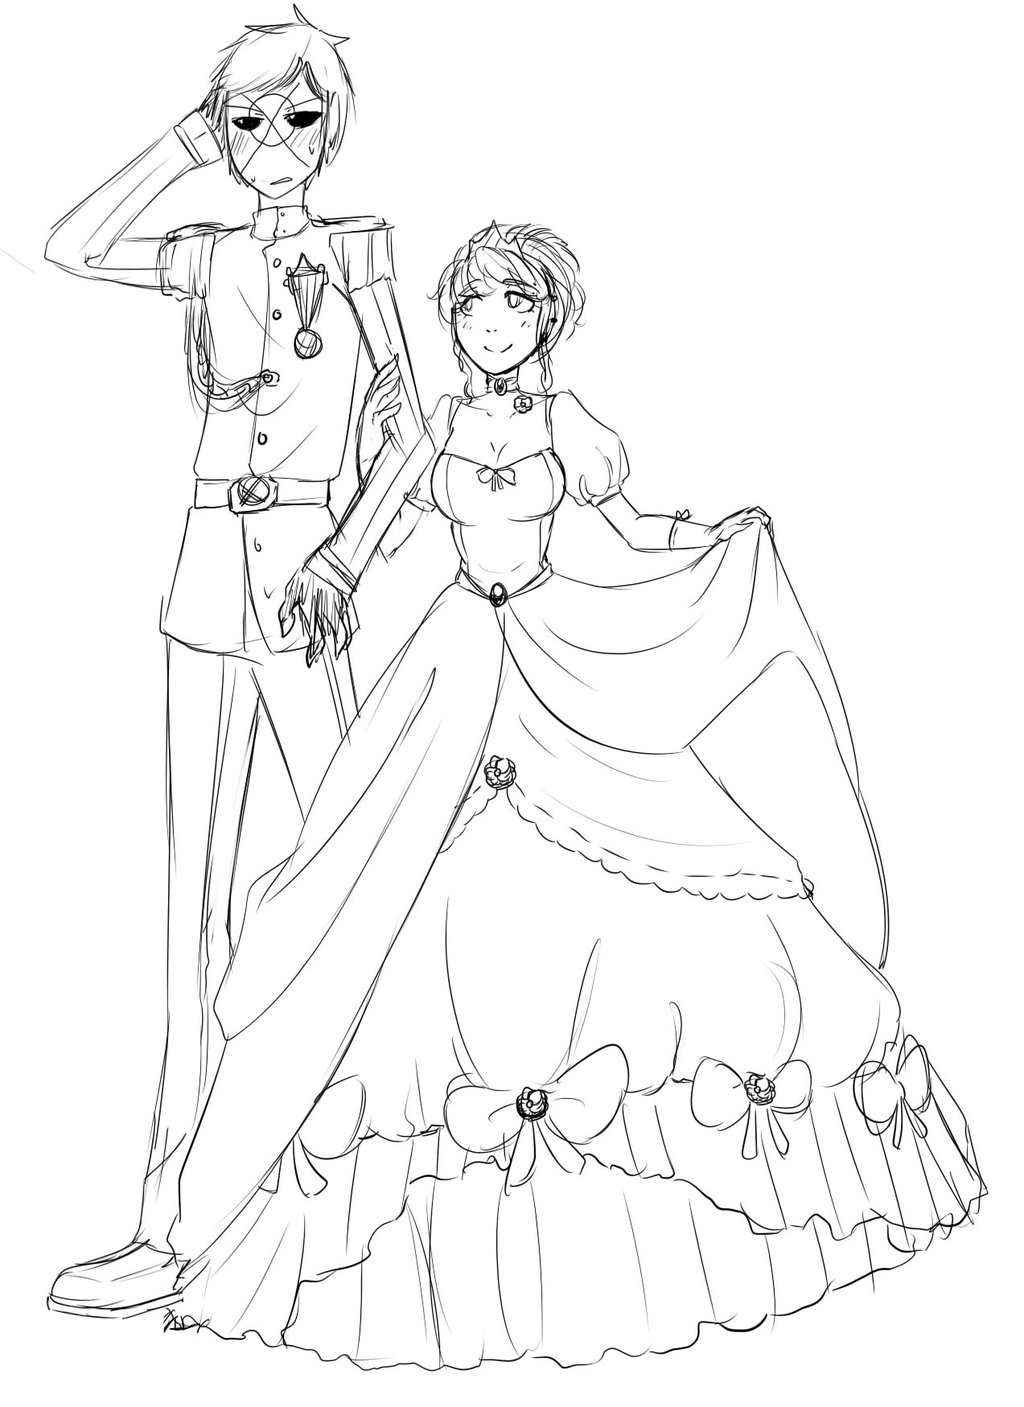 Prince and Princess - Drawing Skill